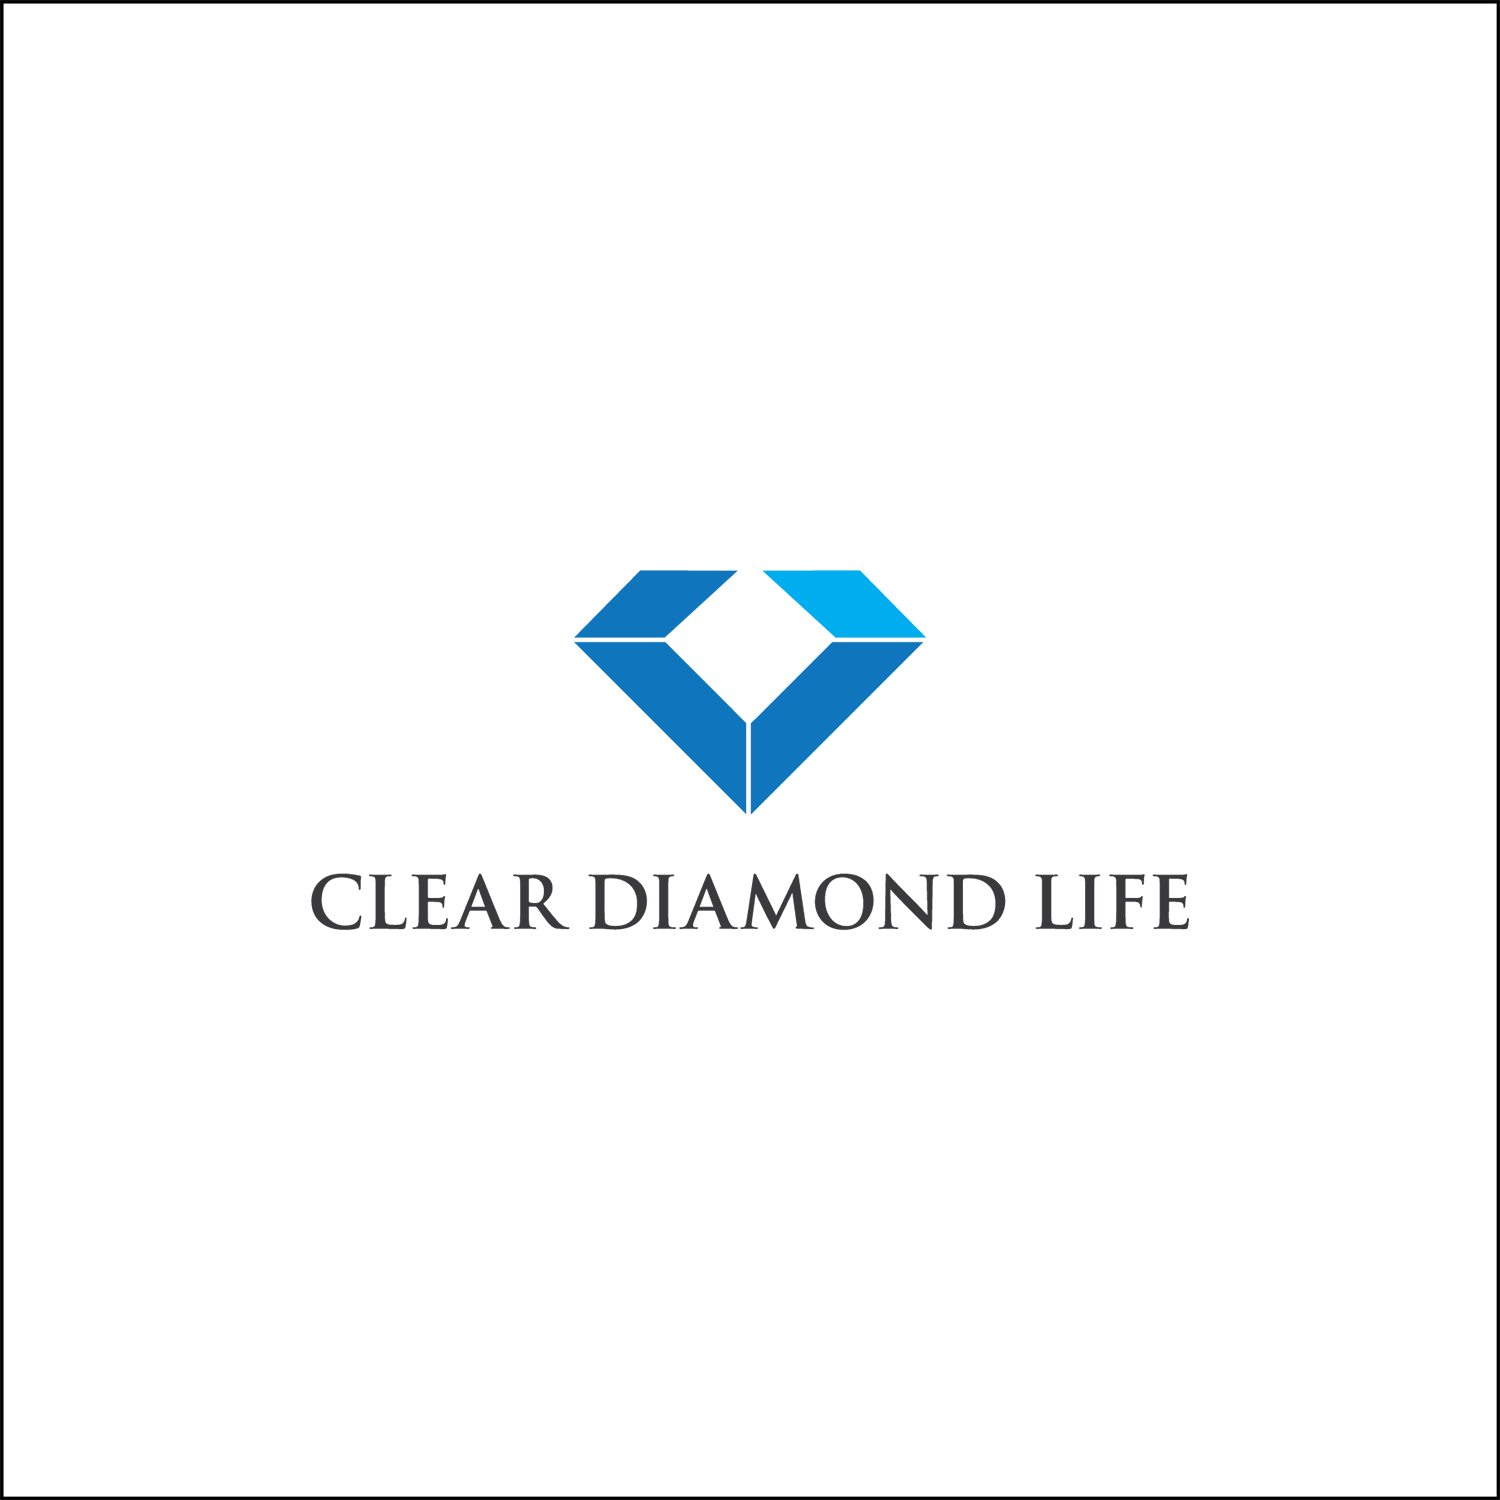 Diamond Life Logo - Serious, Modern, Financial Planning Logo Design for Clear Diamond